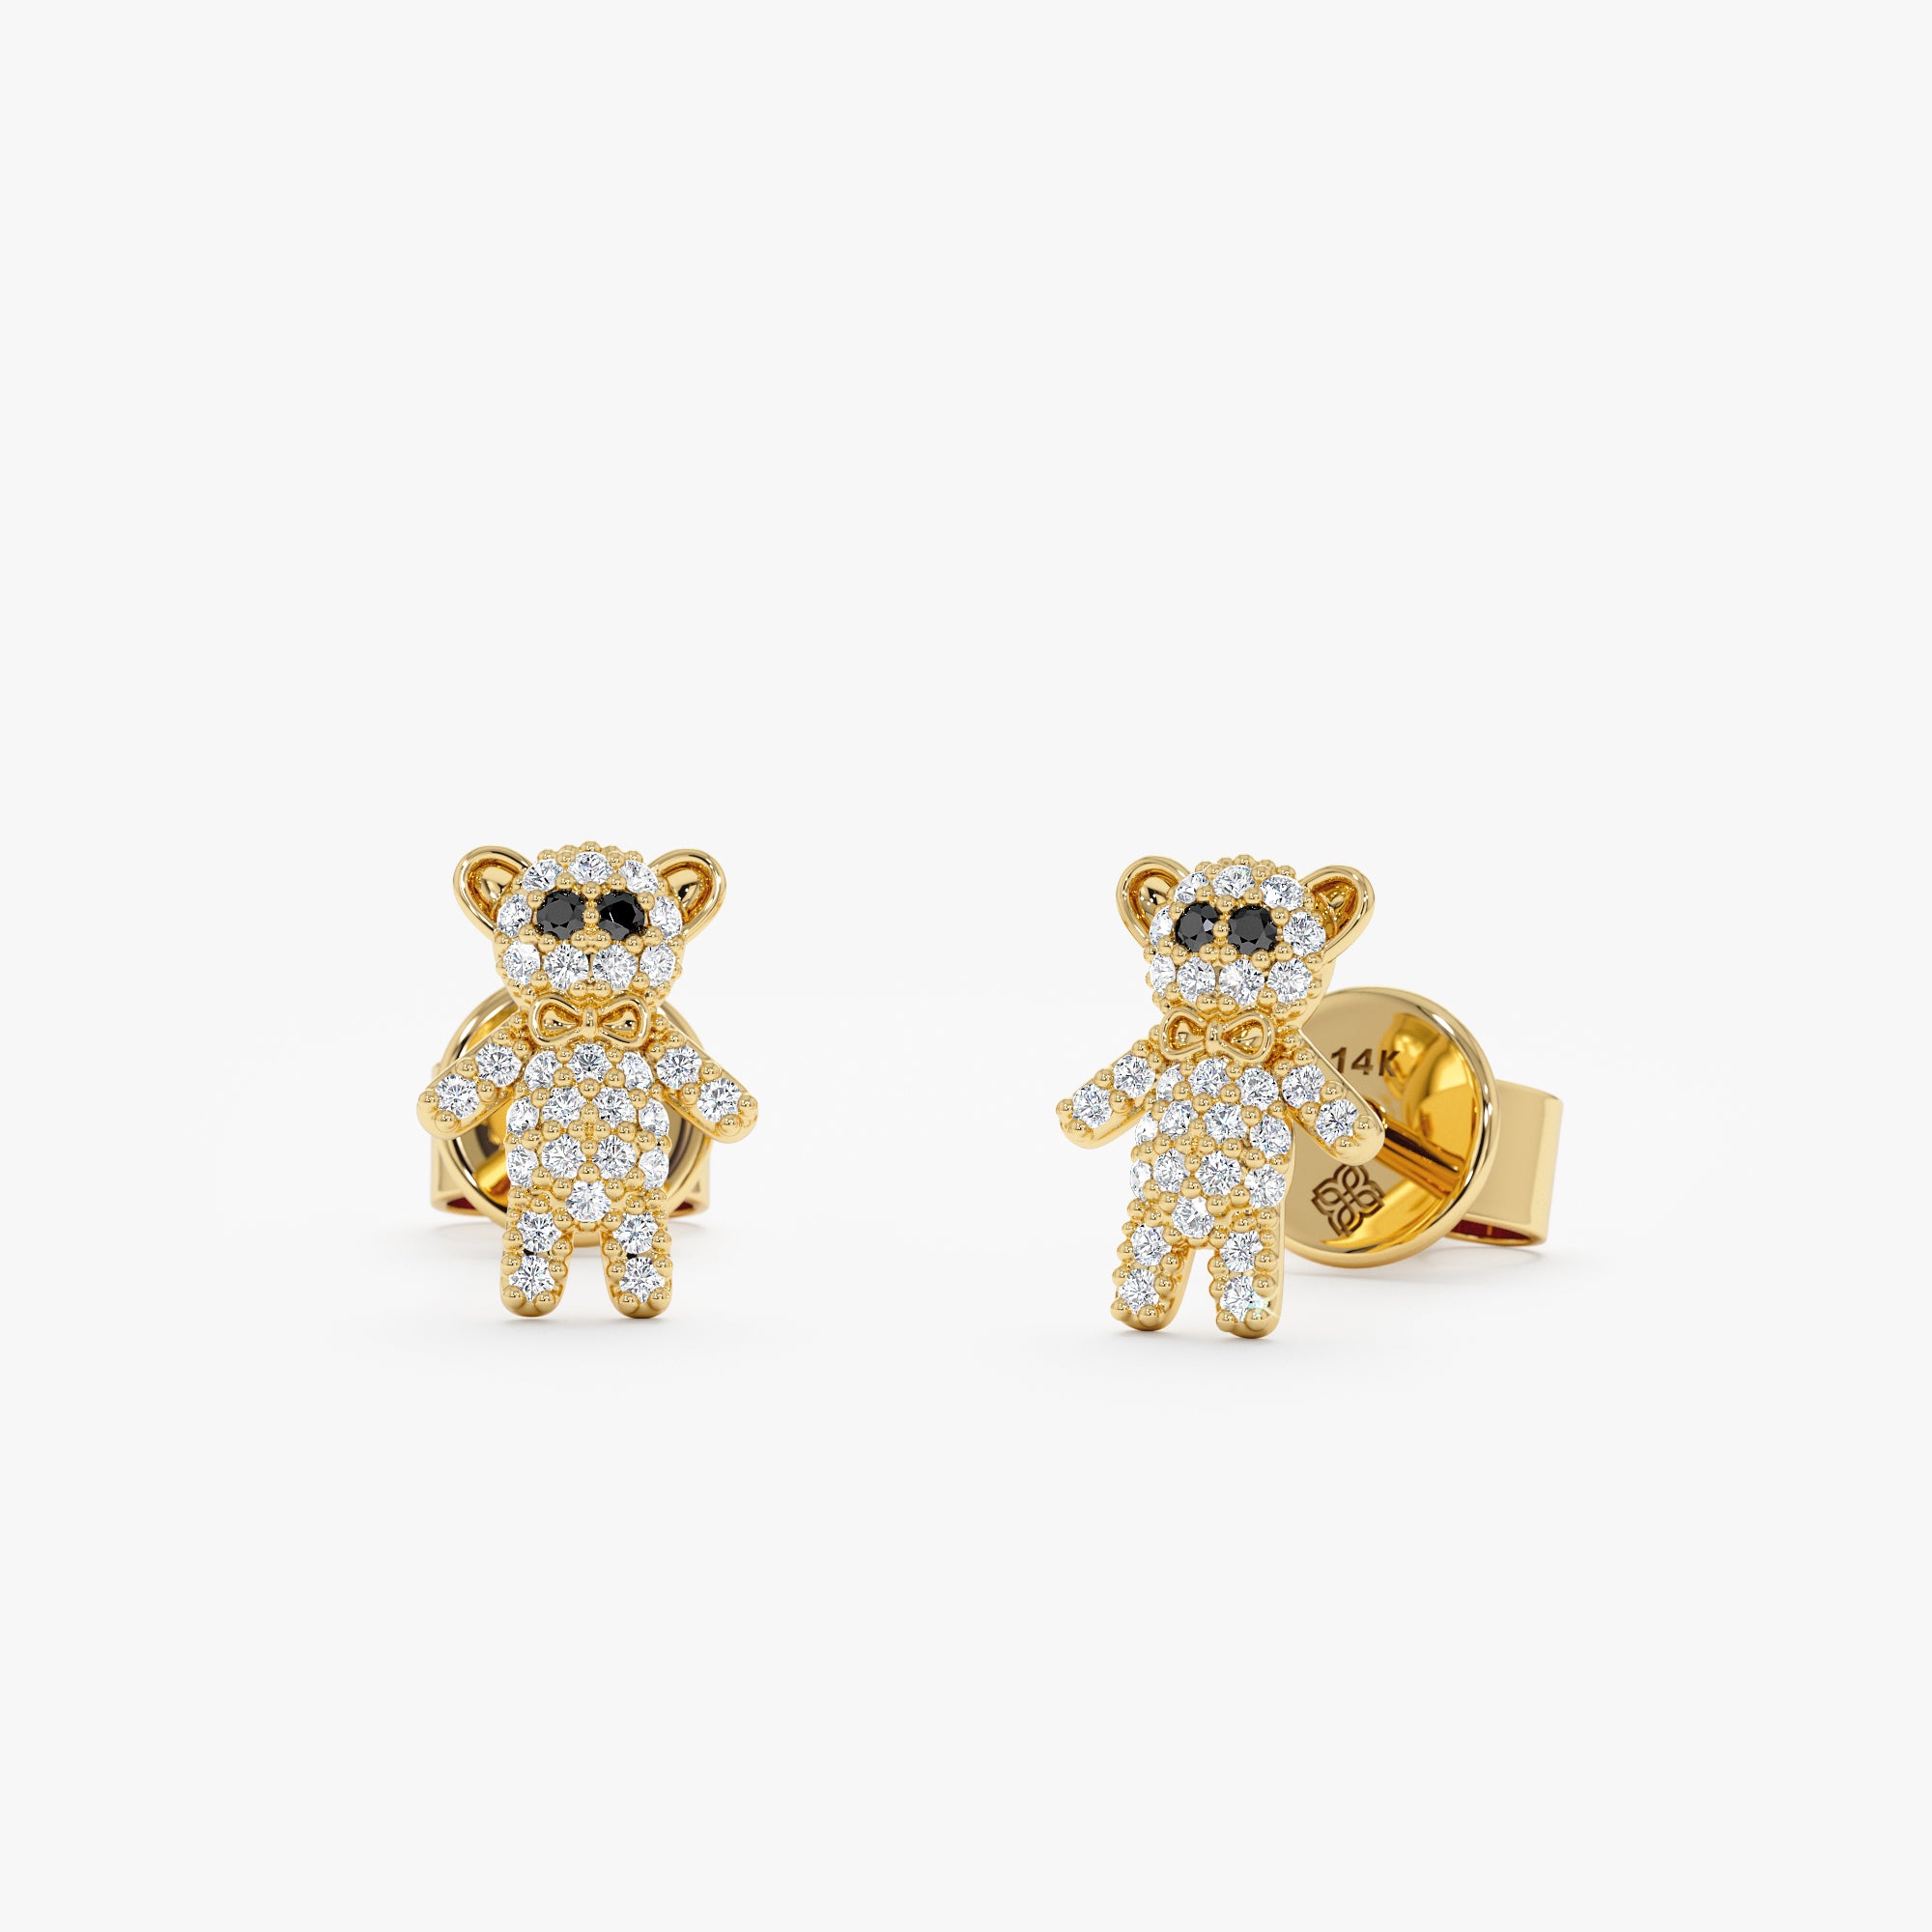 Solid Gold Natural Diamond Teddy Bear Studs | Handmade Jewelry